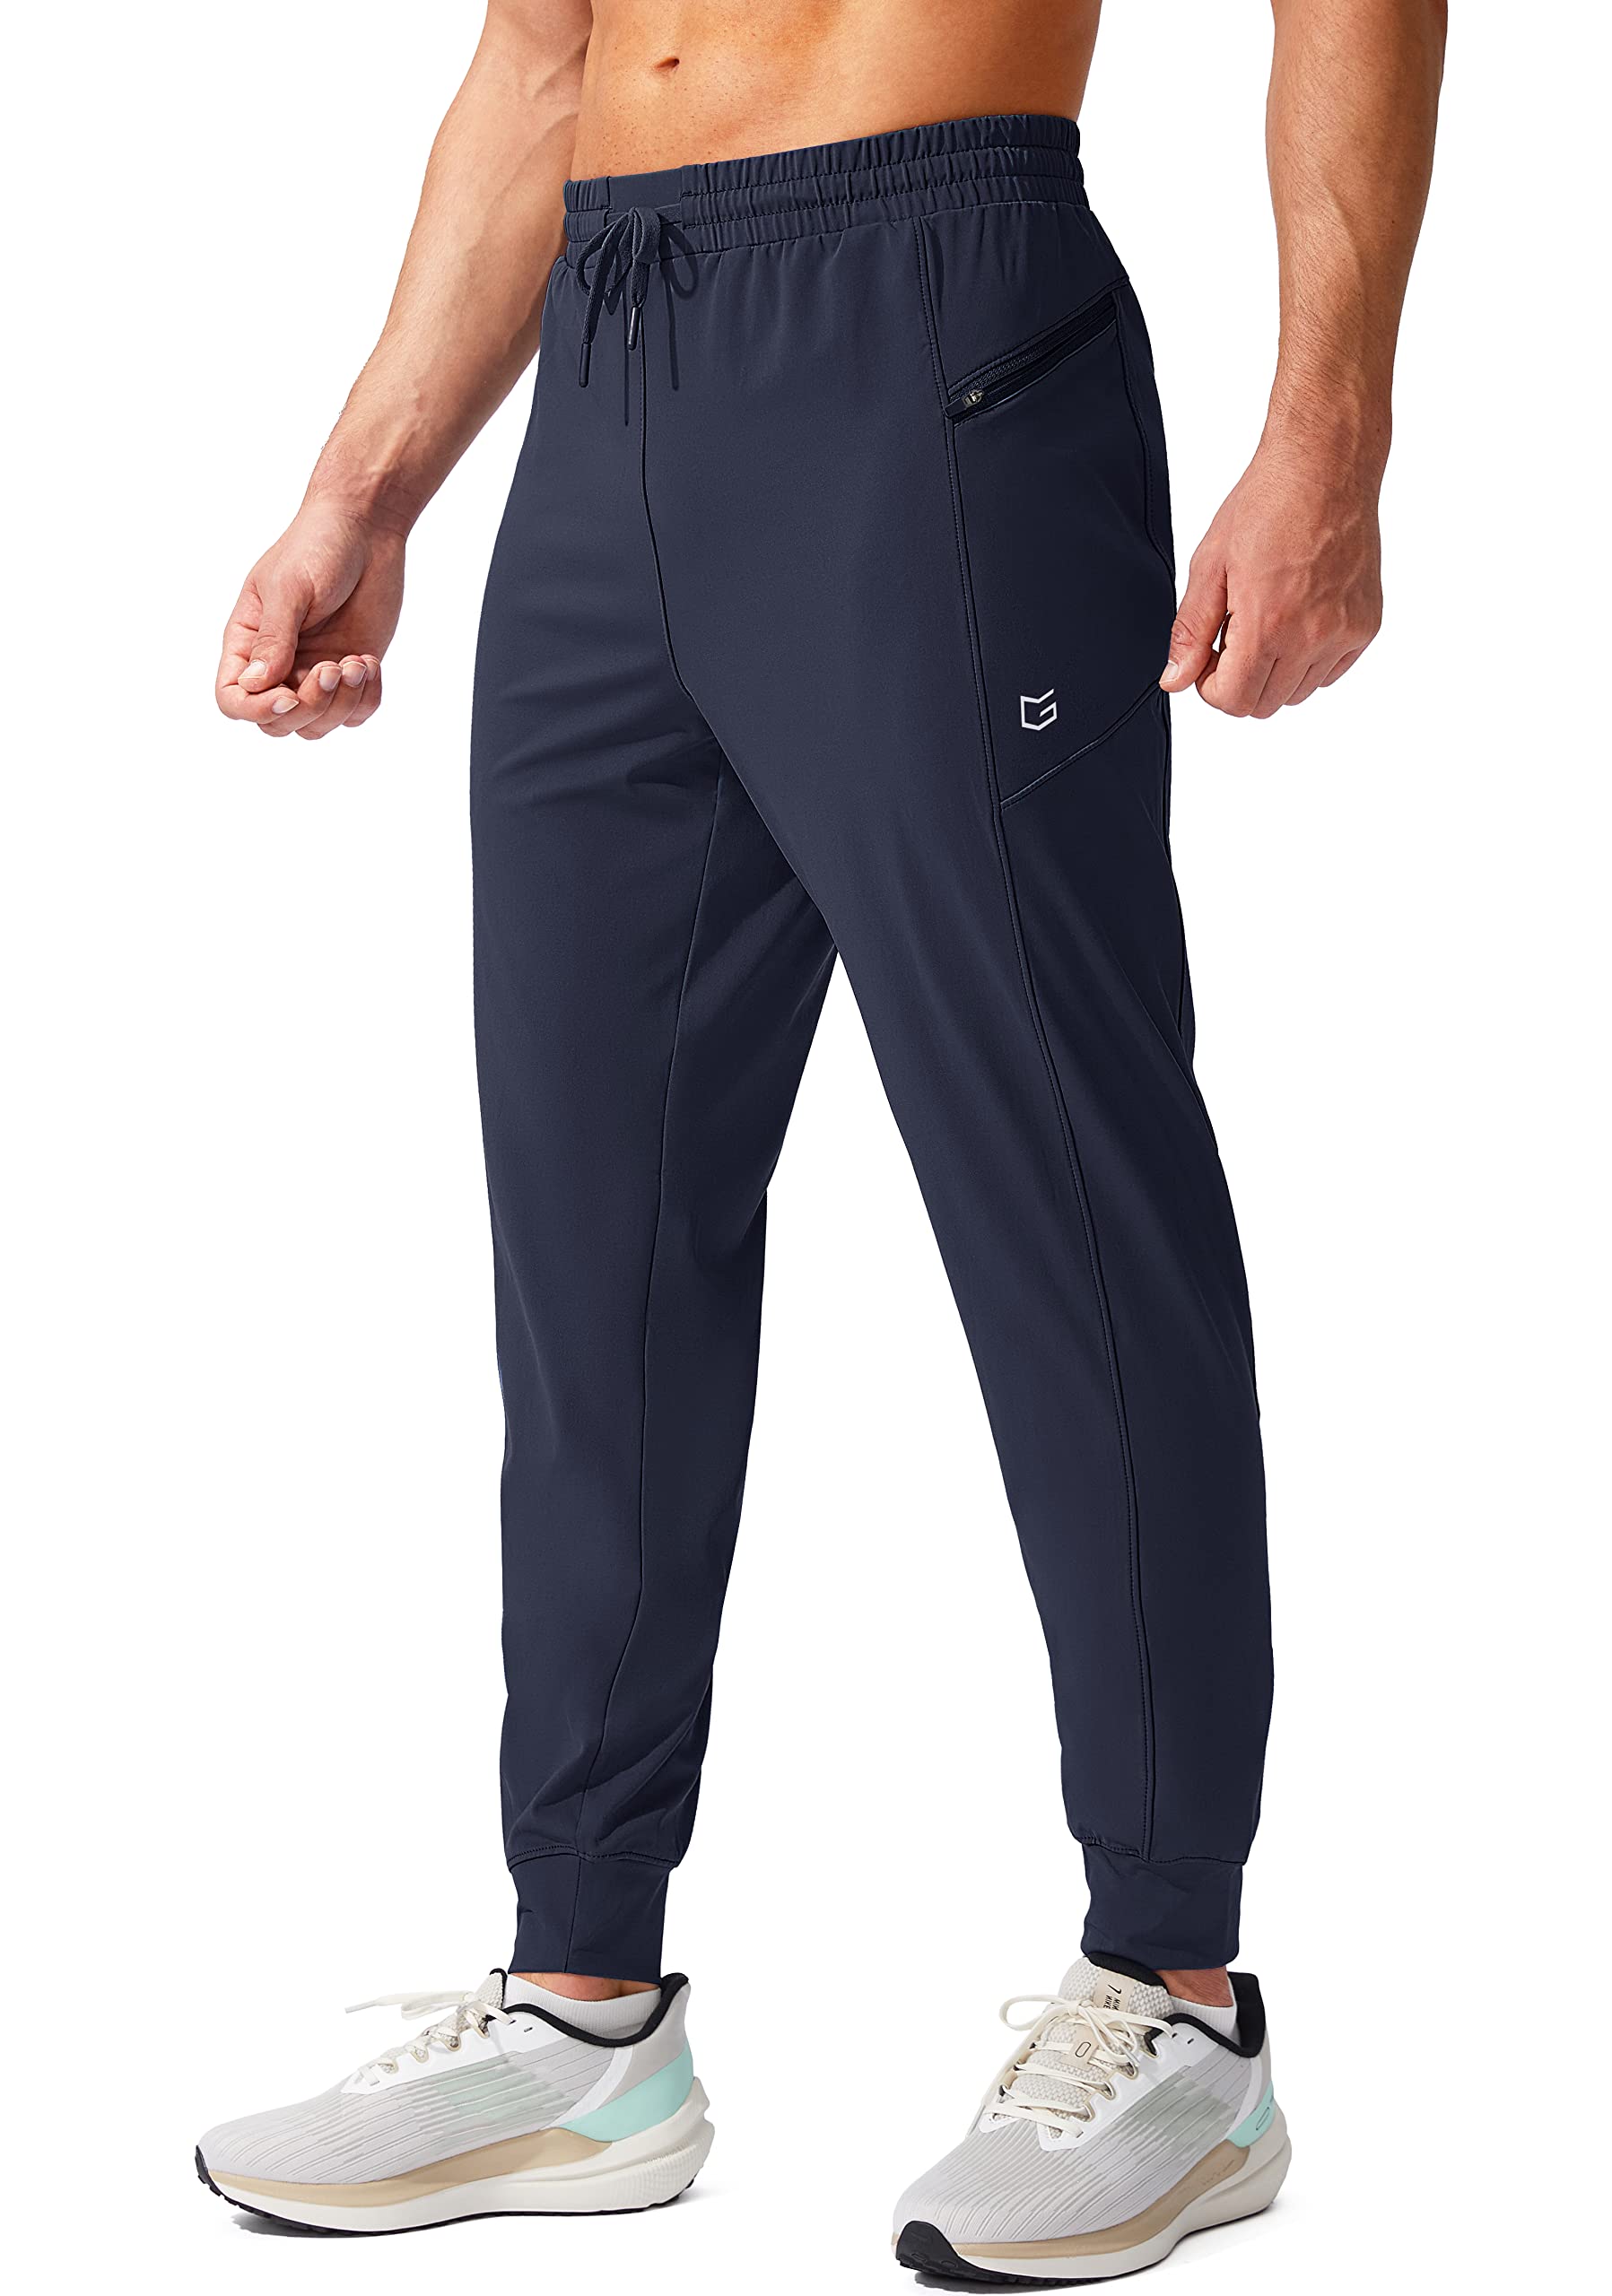 G Gradual Men's Joggers Pants with Zipper Pockets Stretch Athletic